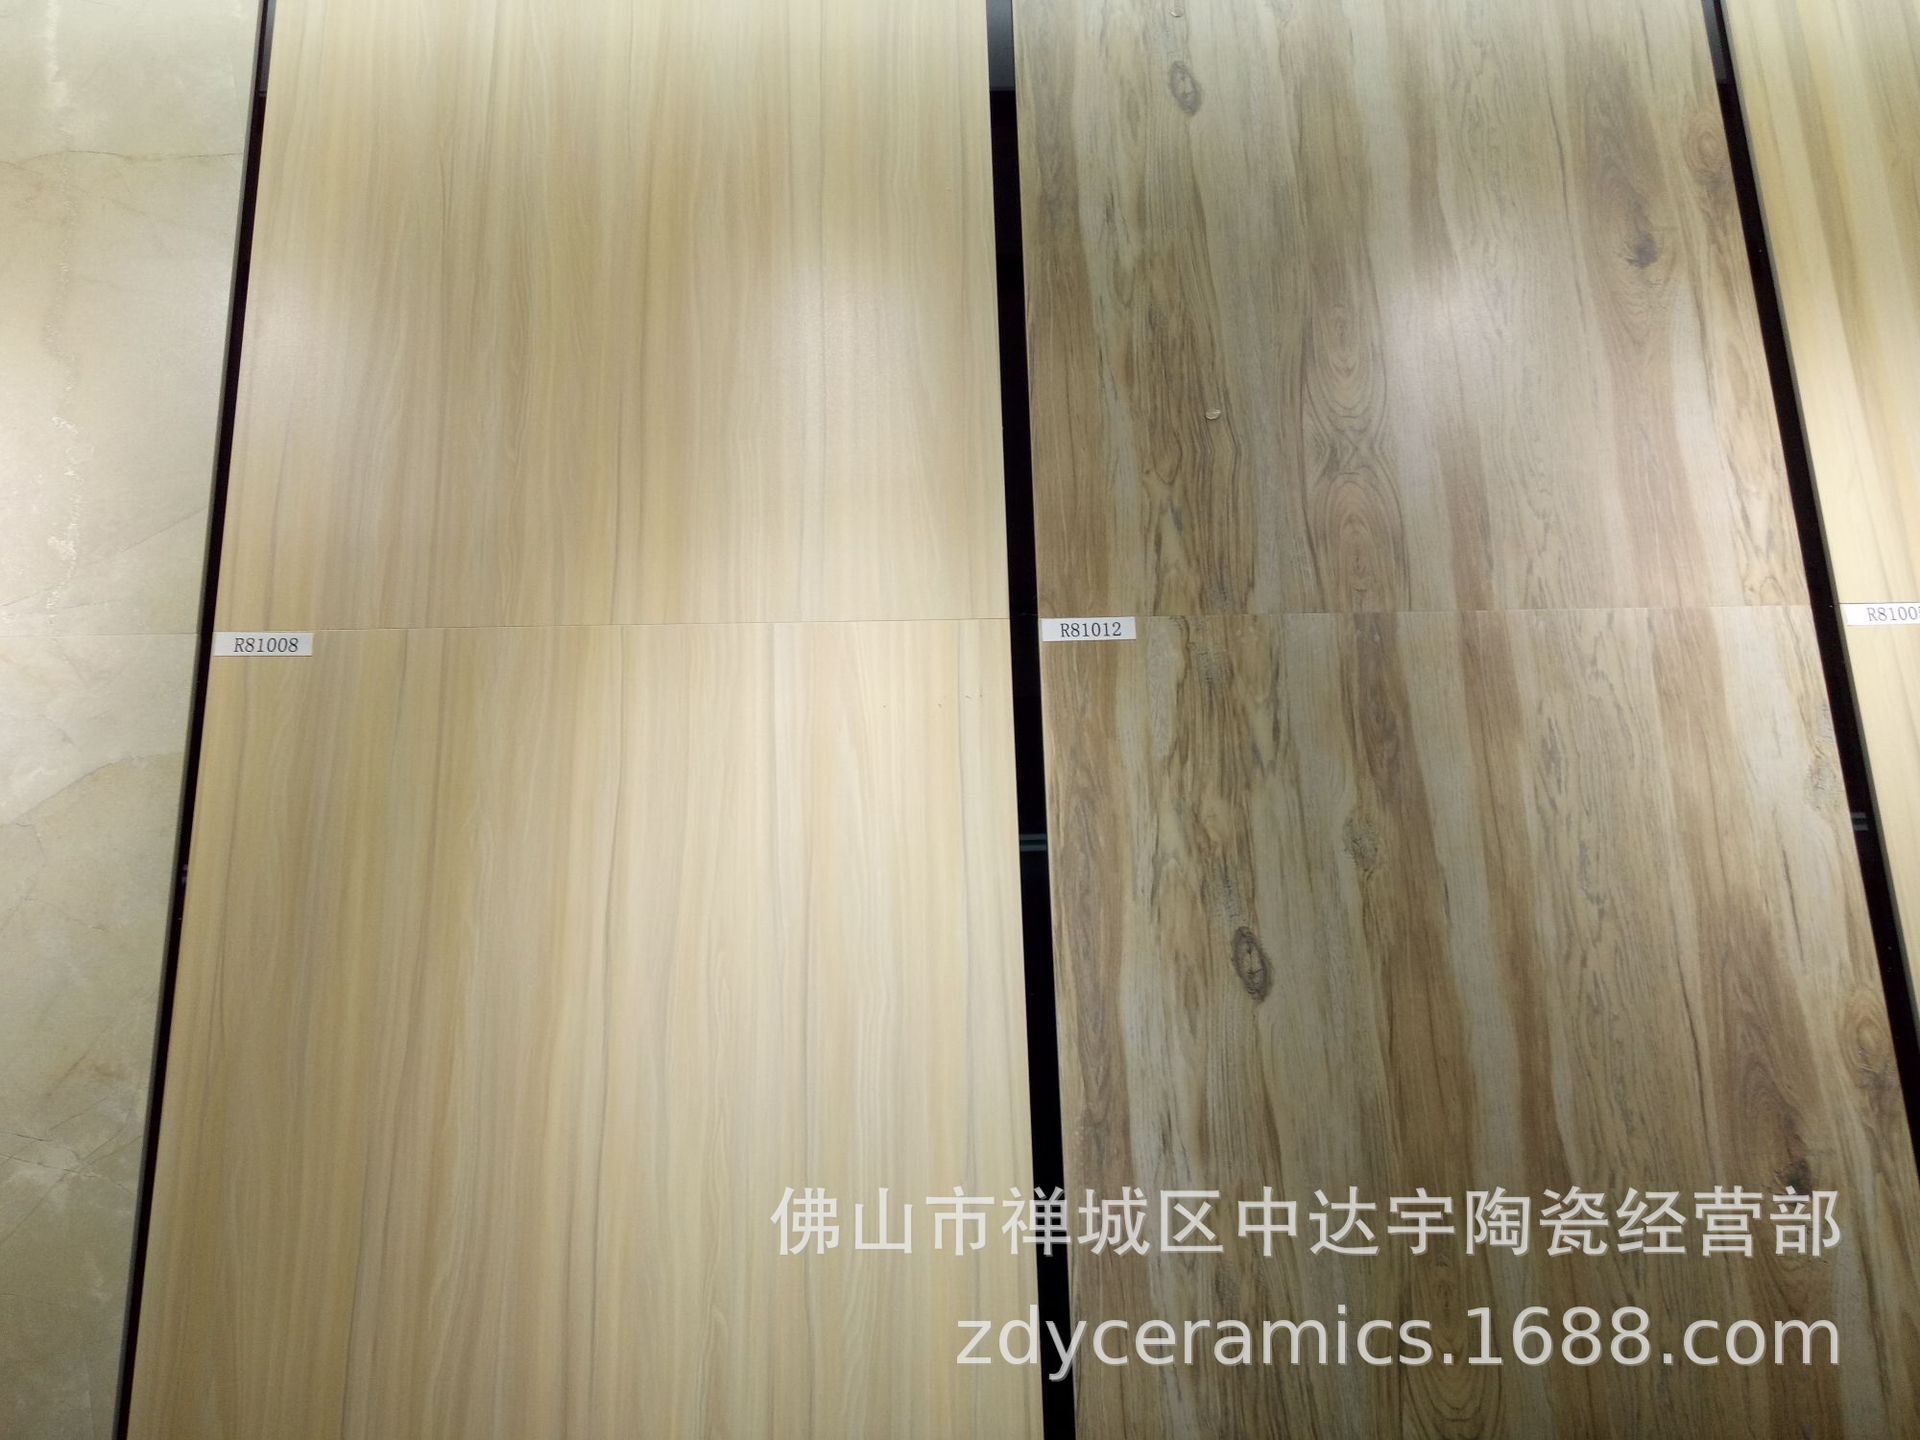 FSMJ800x800mm负离子木纹柔光仿古大理石酒店客厅卫生间地板瓷砖示例图15